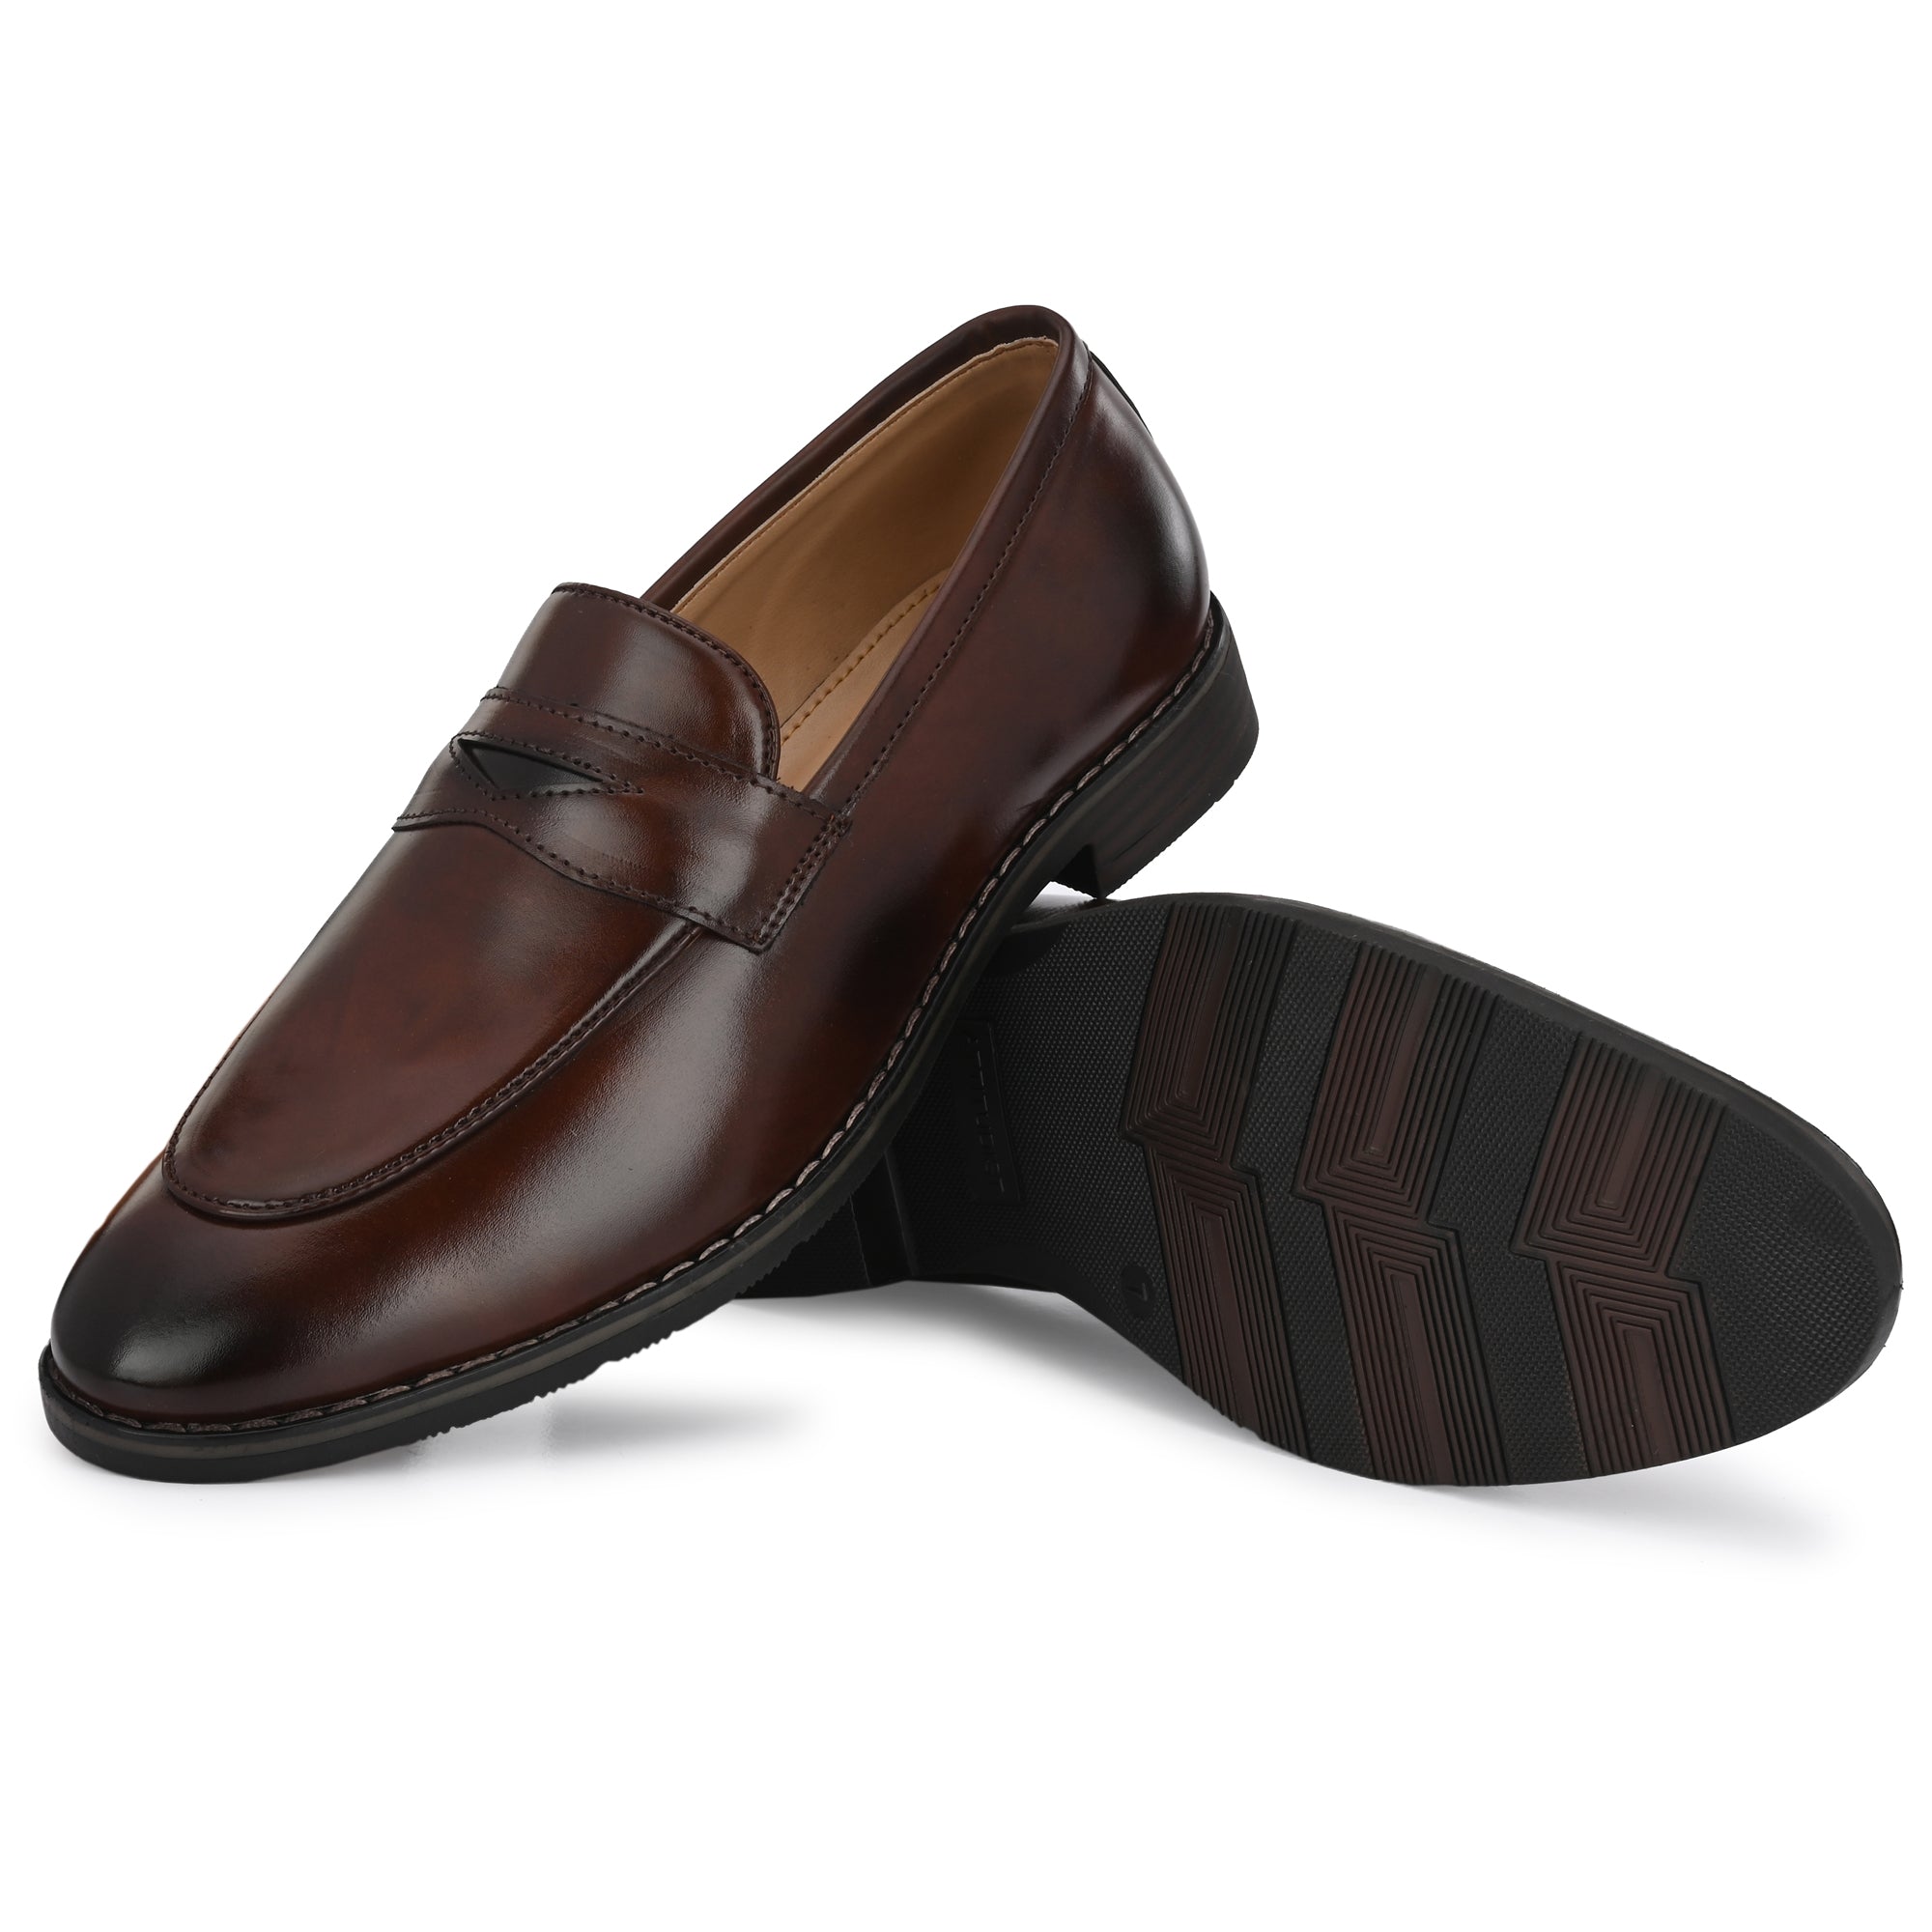 brown-loafers-attitudist-shoes-for-men-sp8b